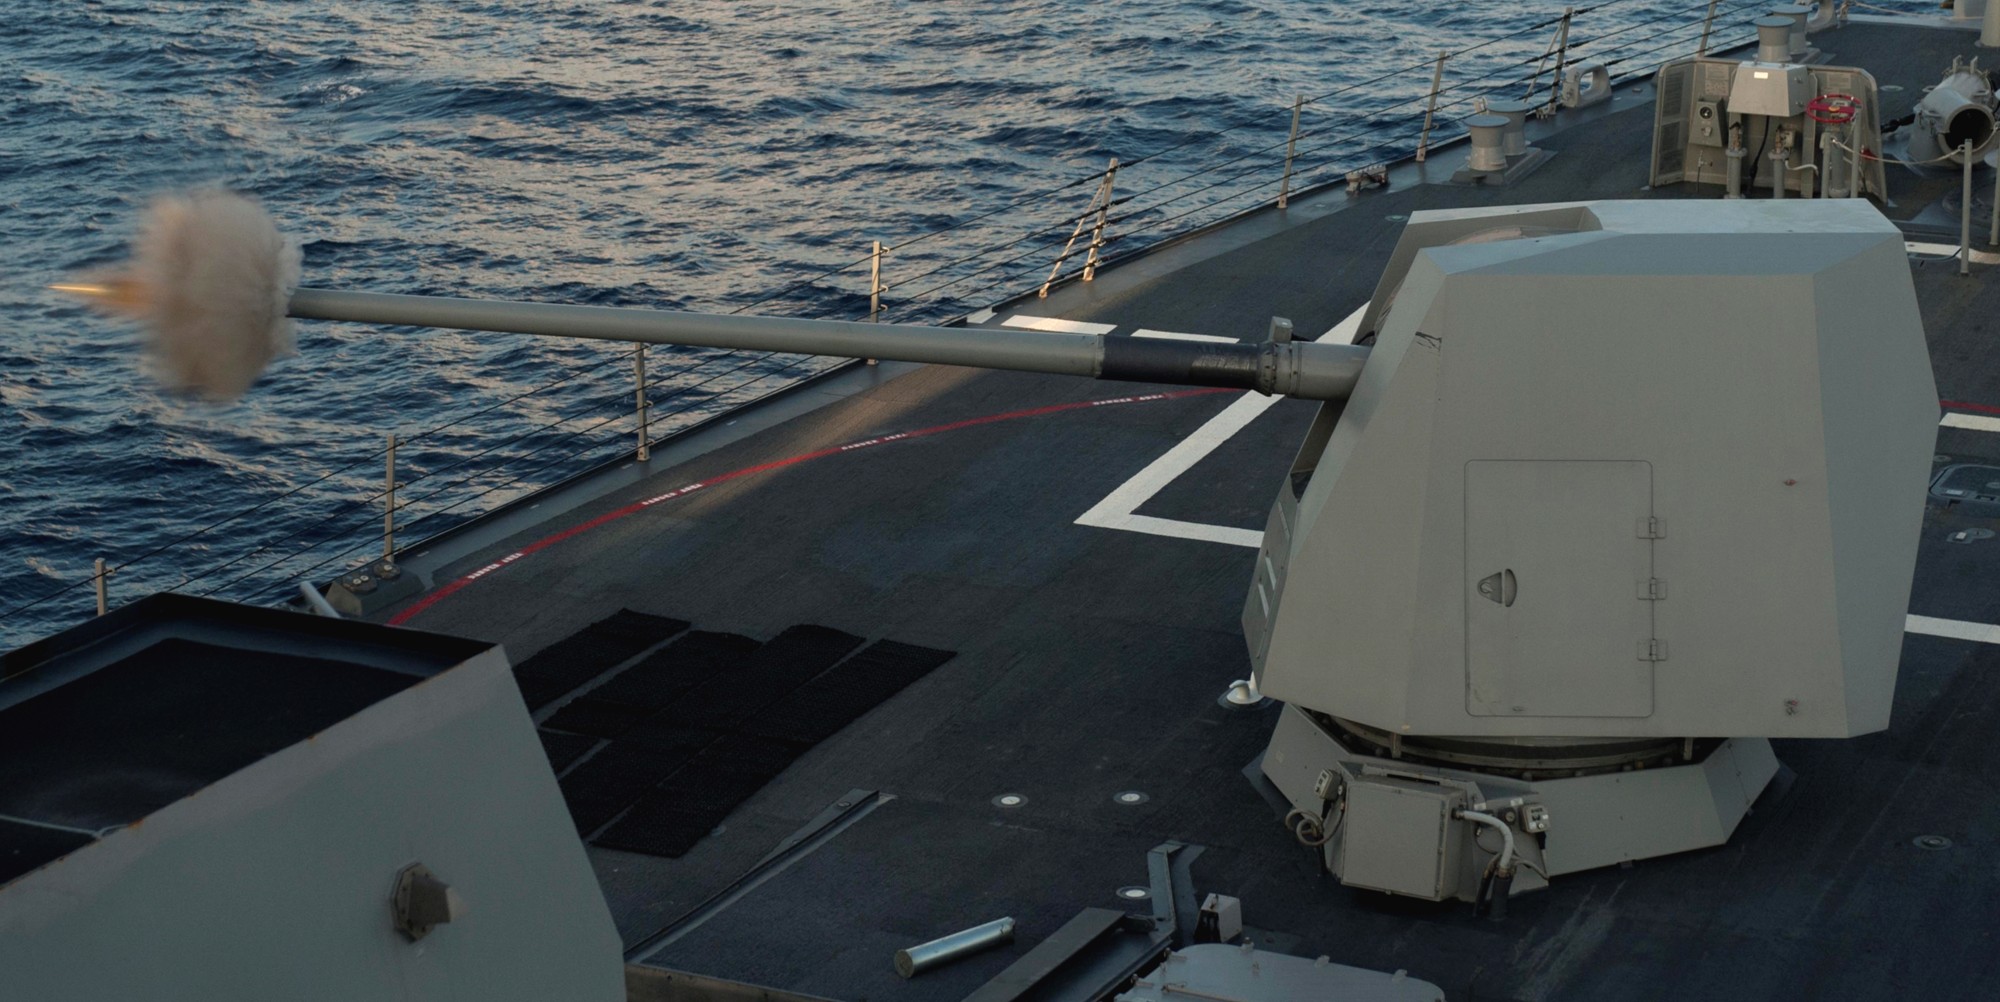 ddg-109 uss jason dunham arleigh burke class guided missile destroyer aegis us navy 65p